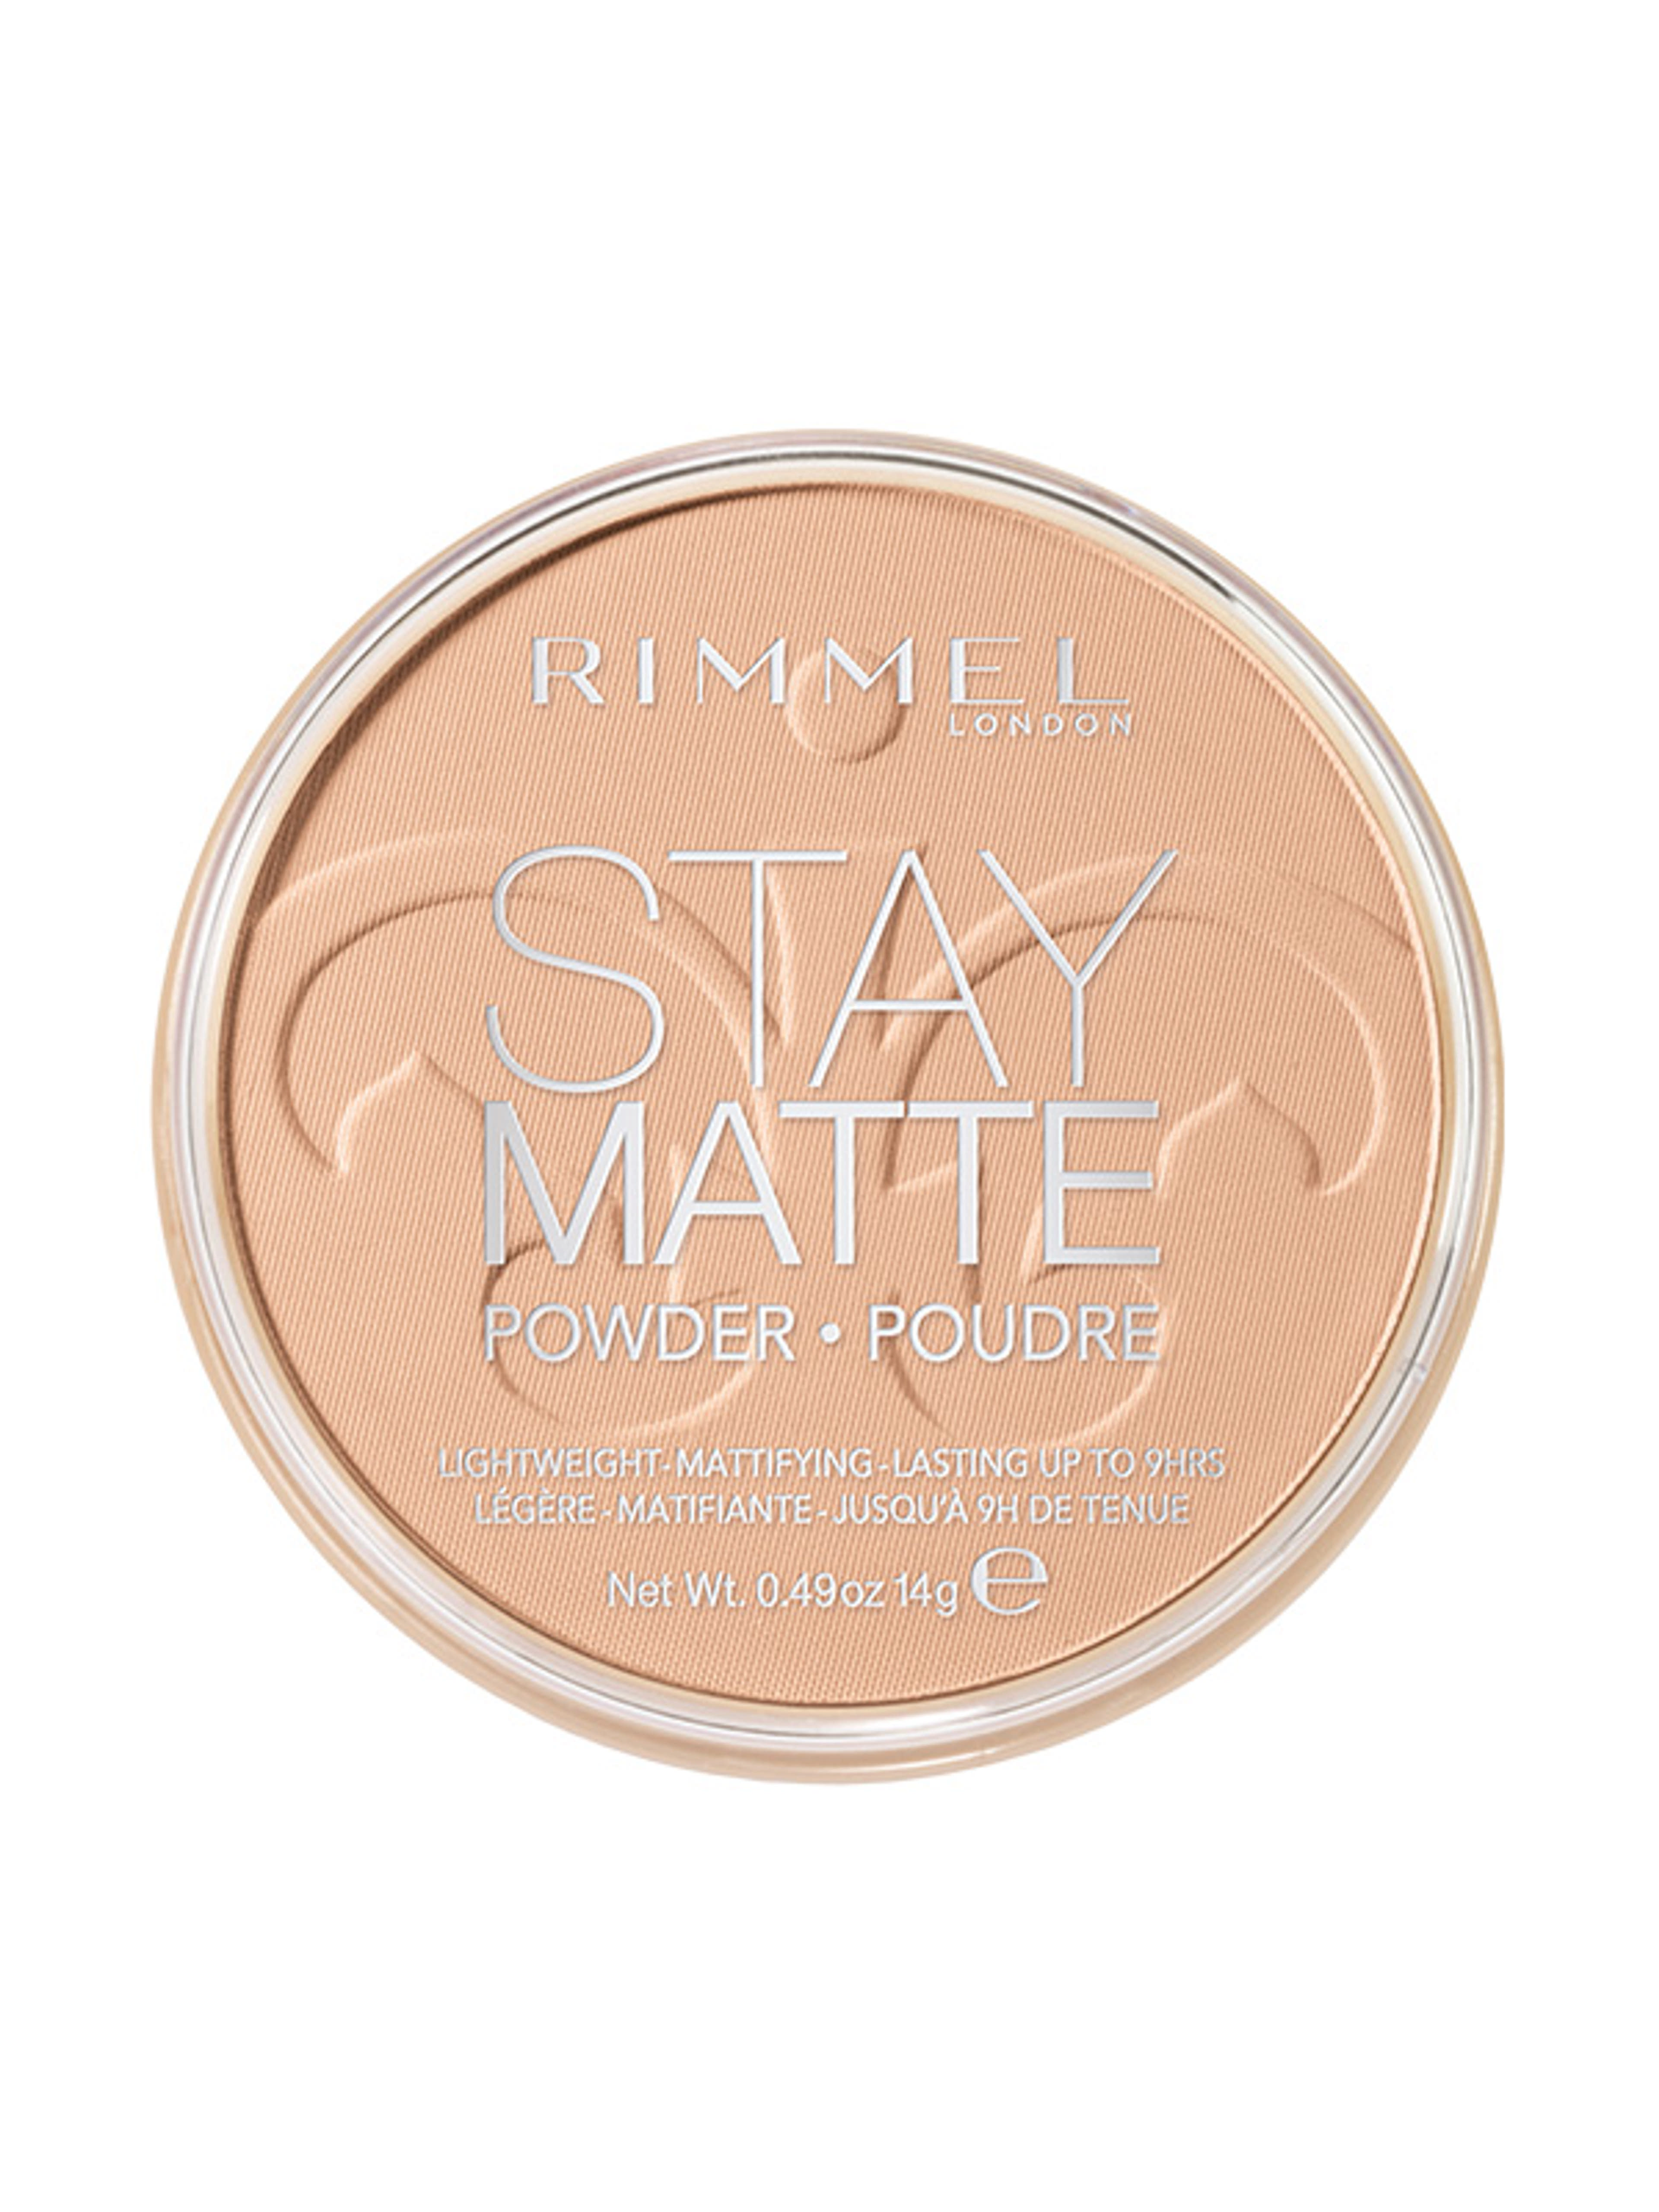 Rimmel Stay Matte púder 005 - 1 db-1